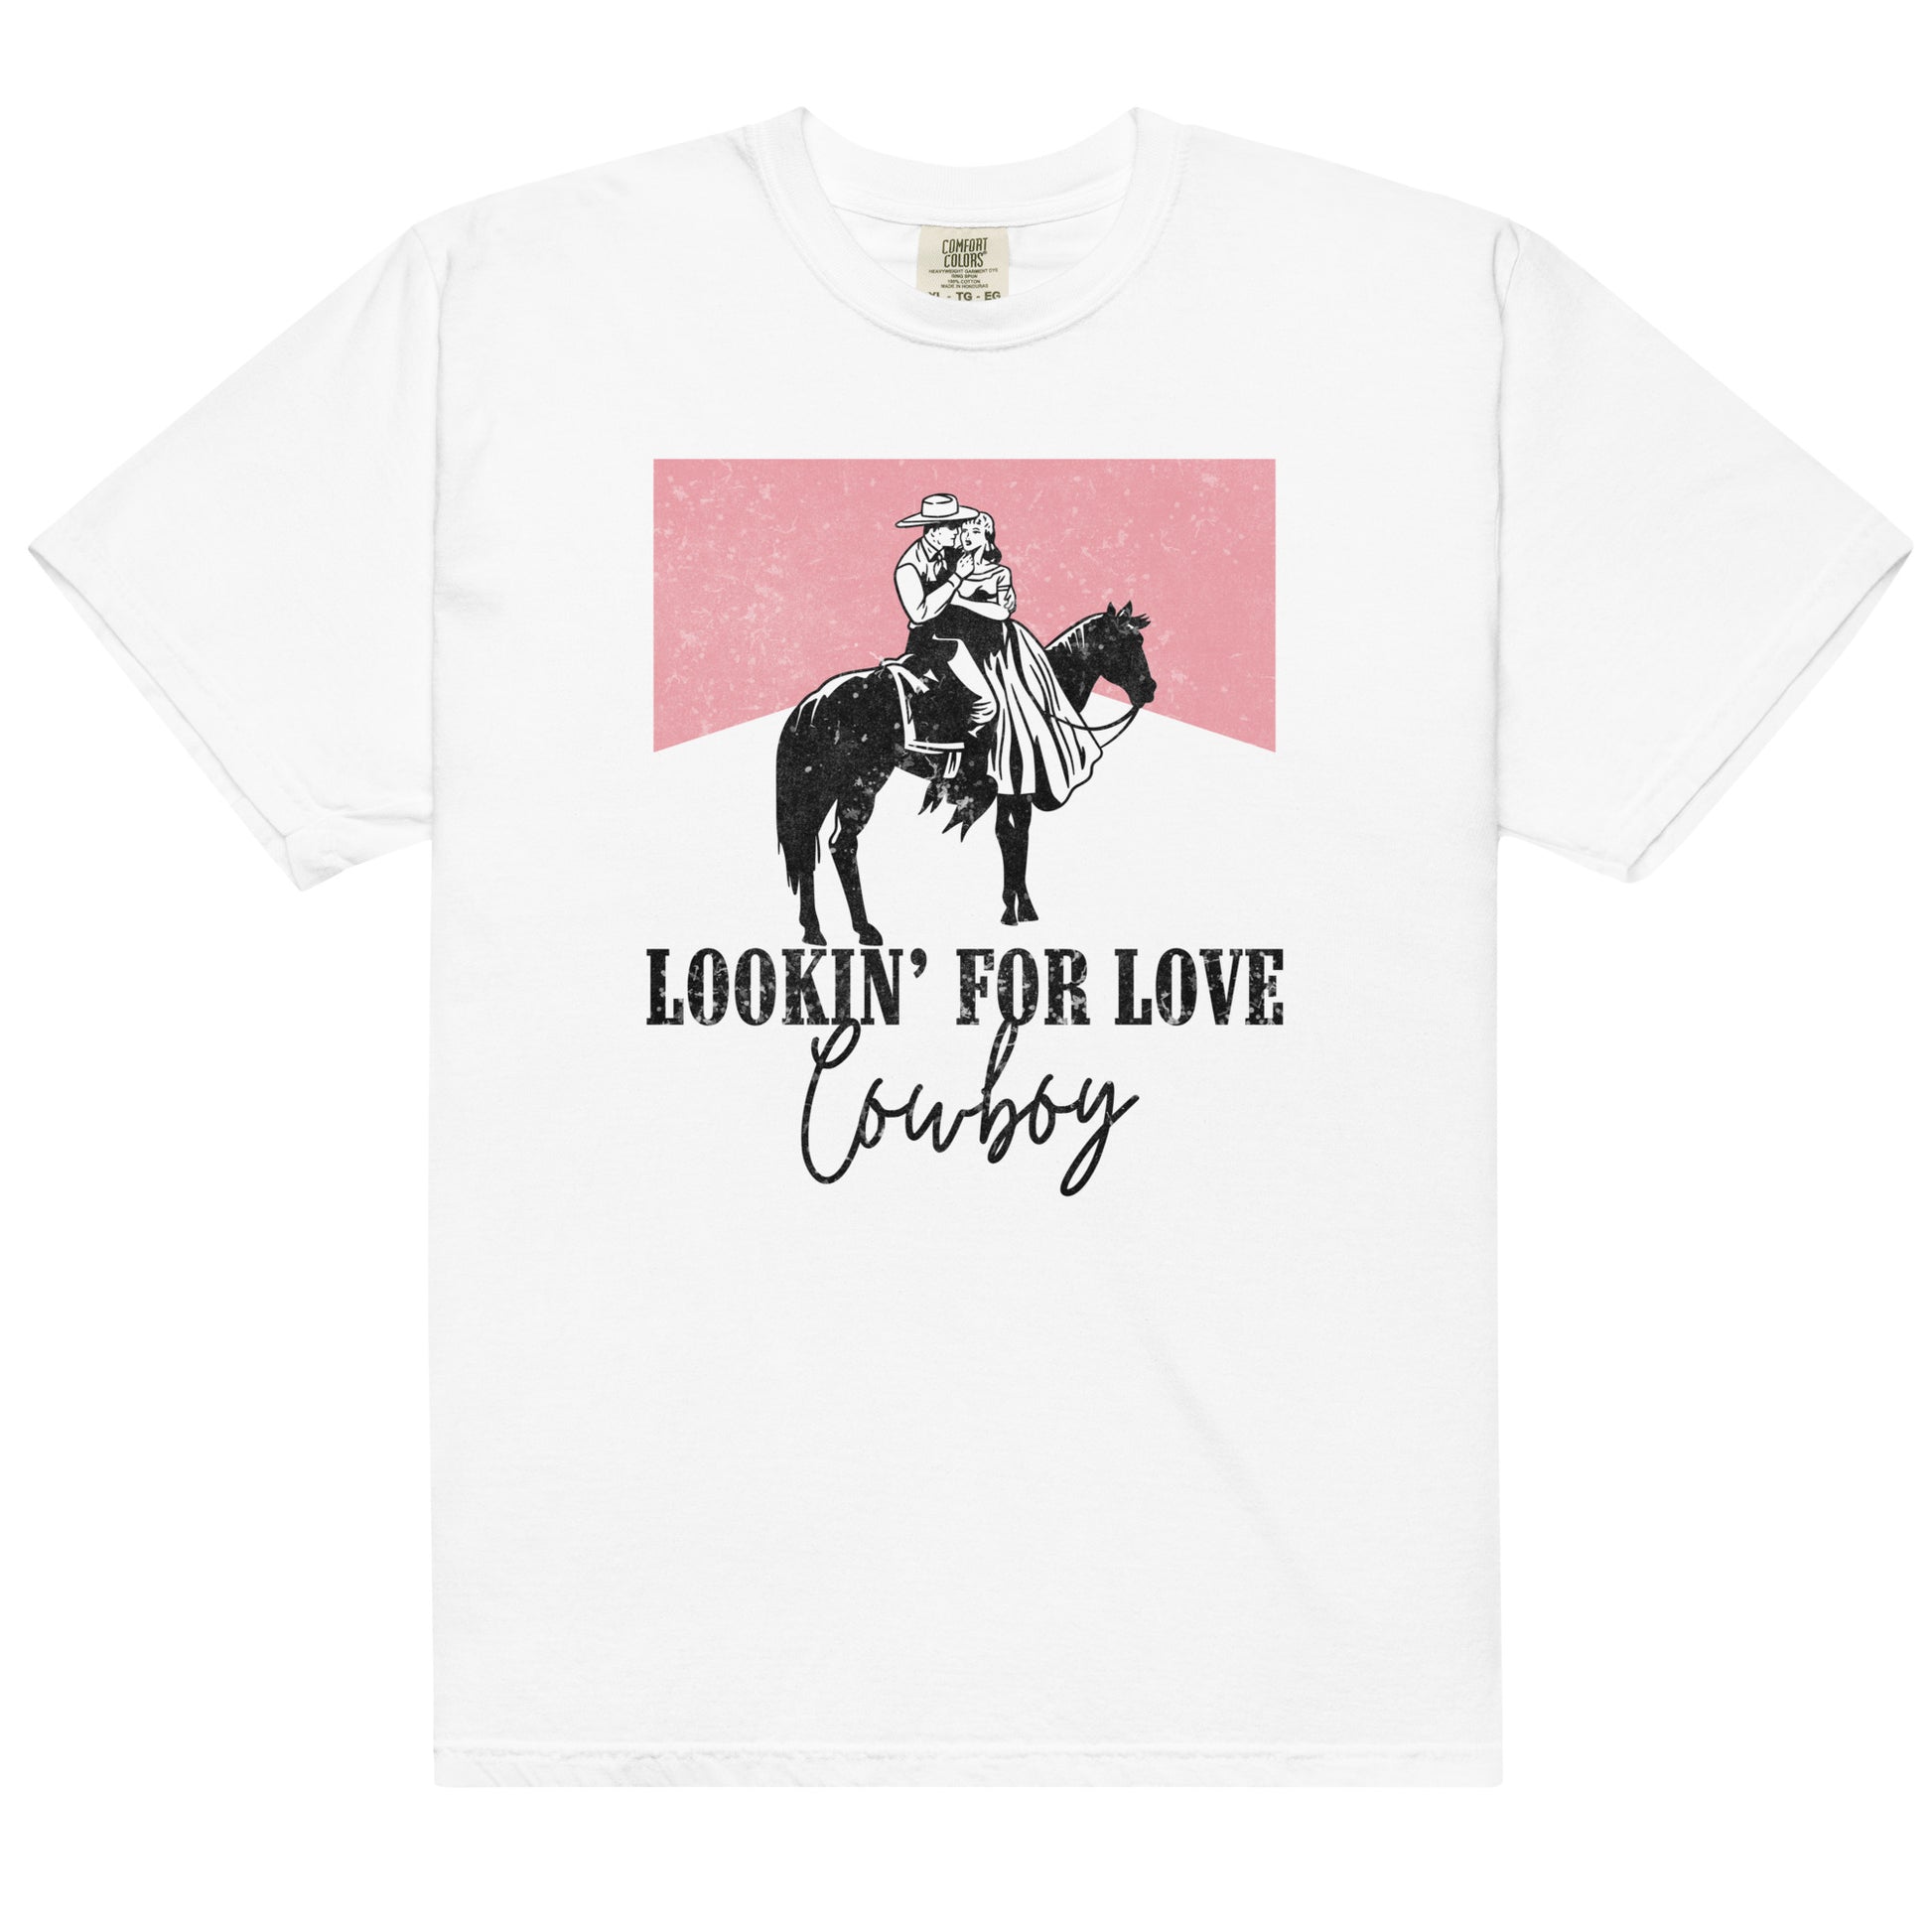 Lookin’ For Love Cowboy Romance Book Tee Shirt 